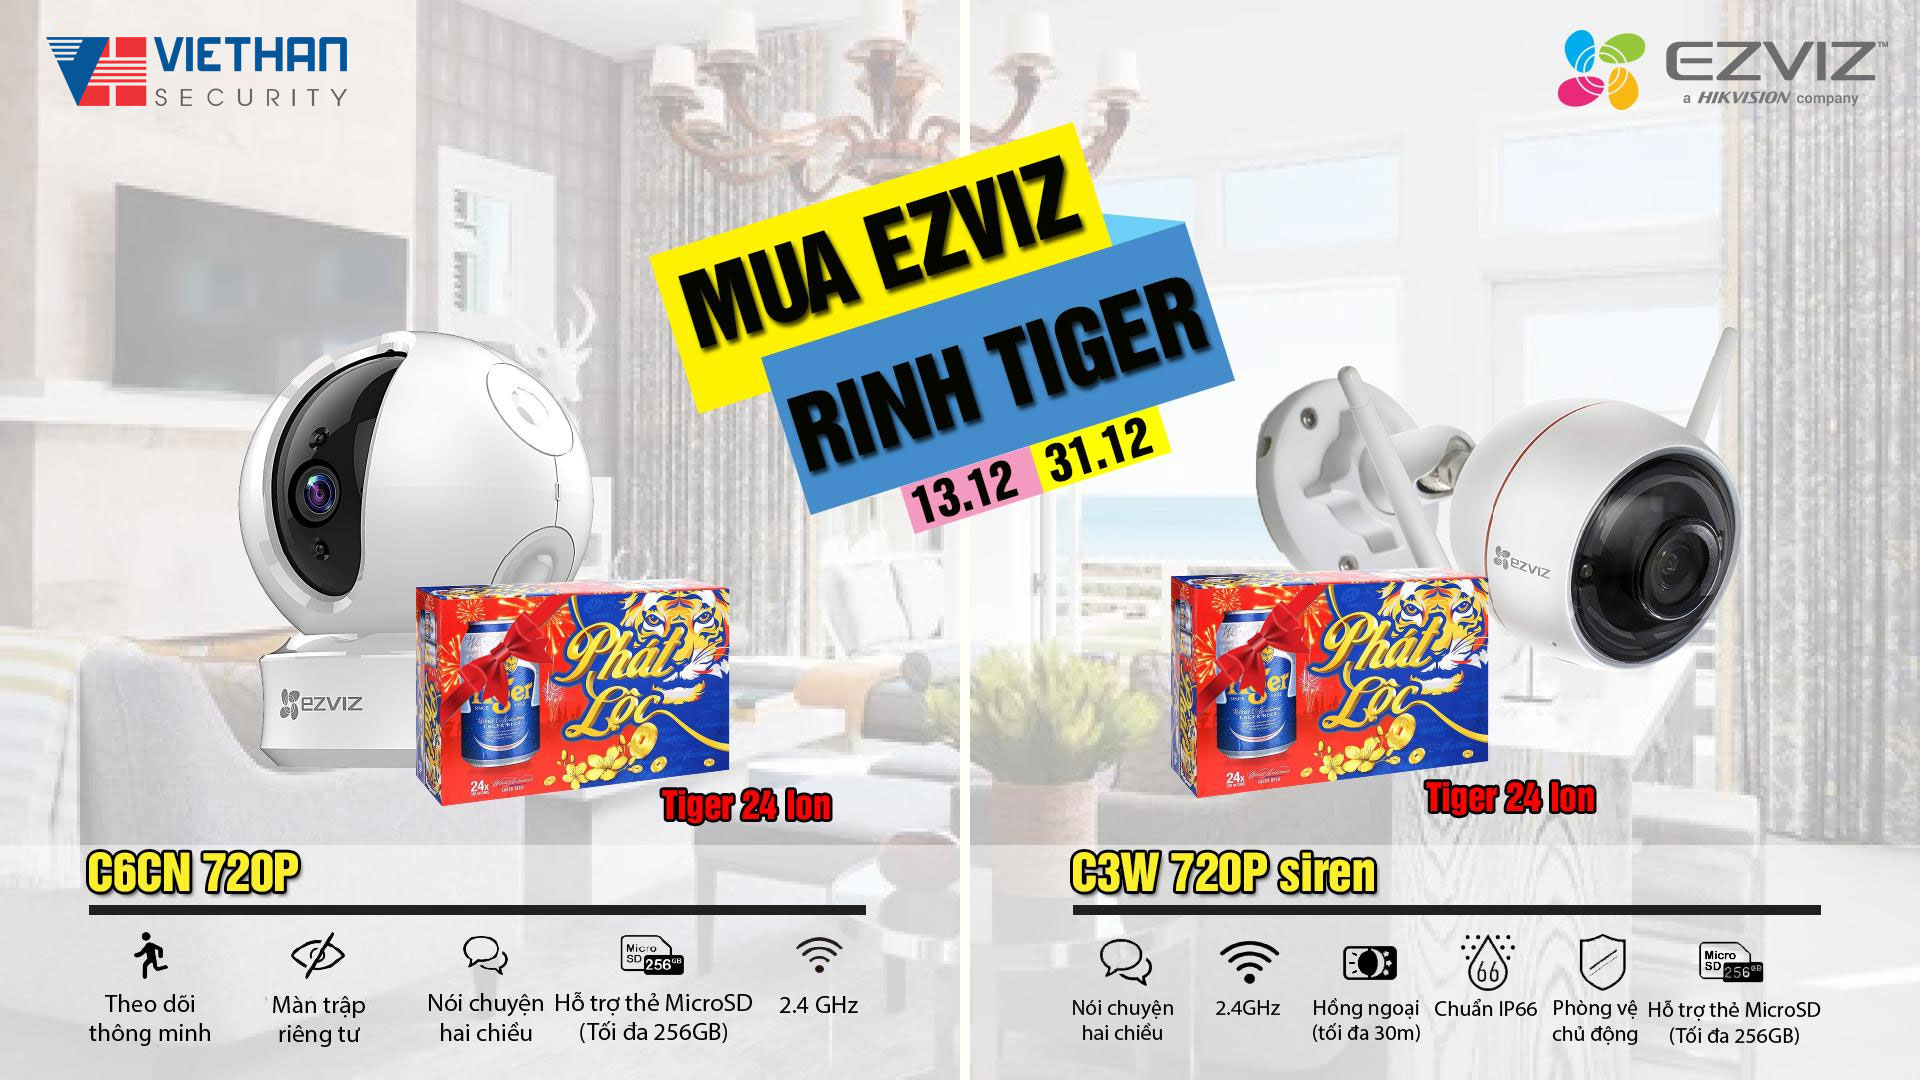 Tặng ngay thùng bia Tiger khi mua camera EZVIZ